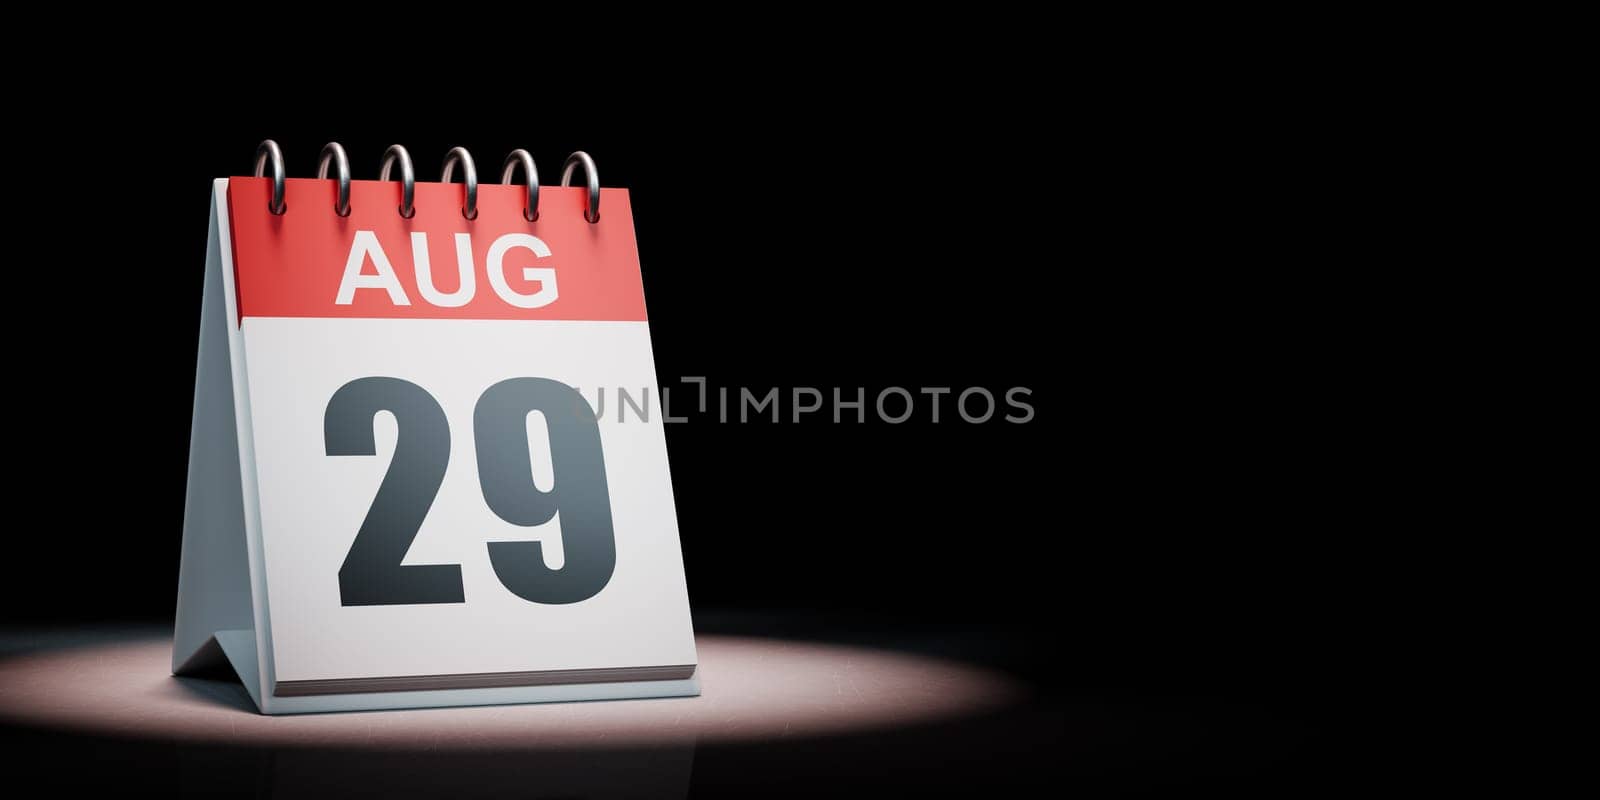 August 29 Calendar Spotlighted on Black Background by make